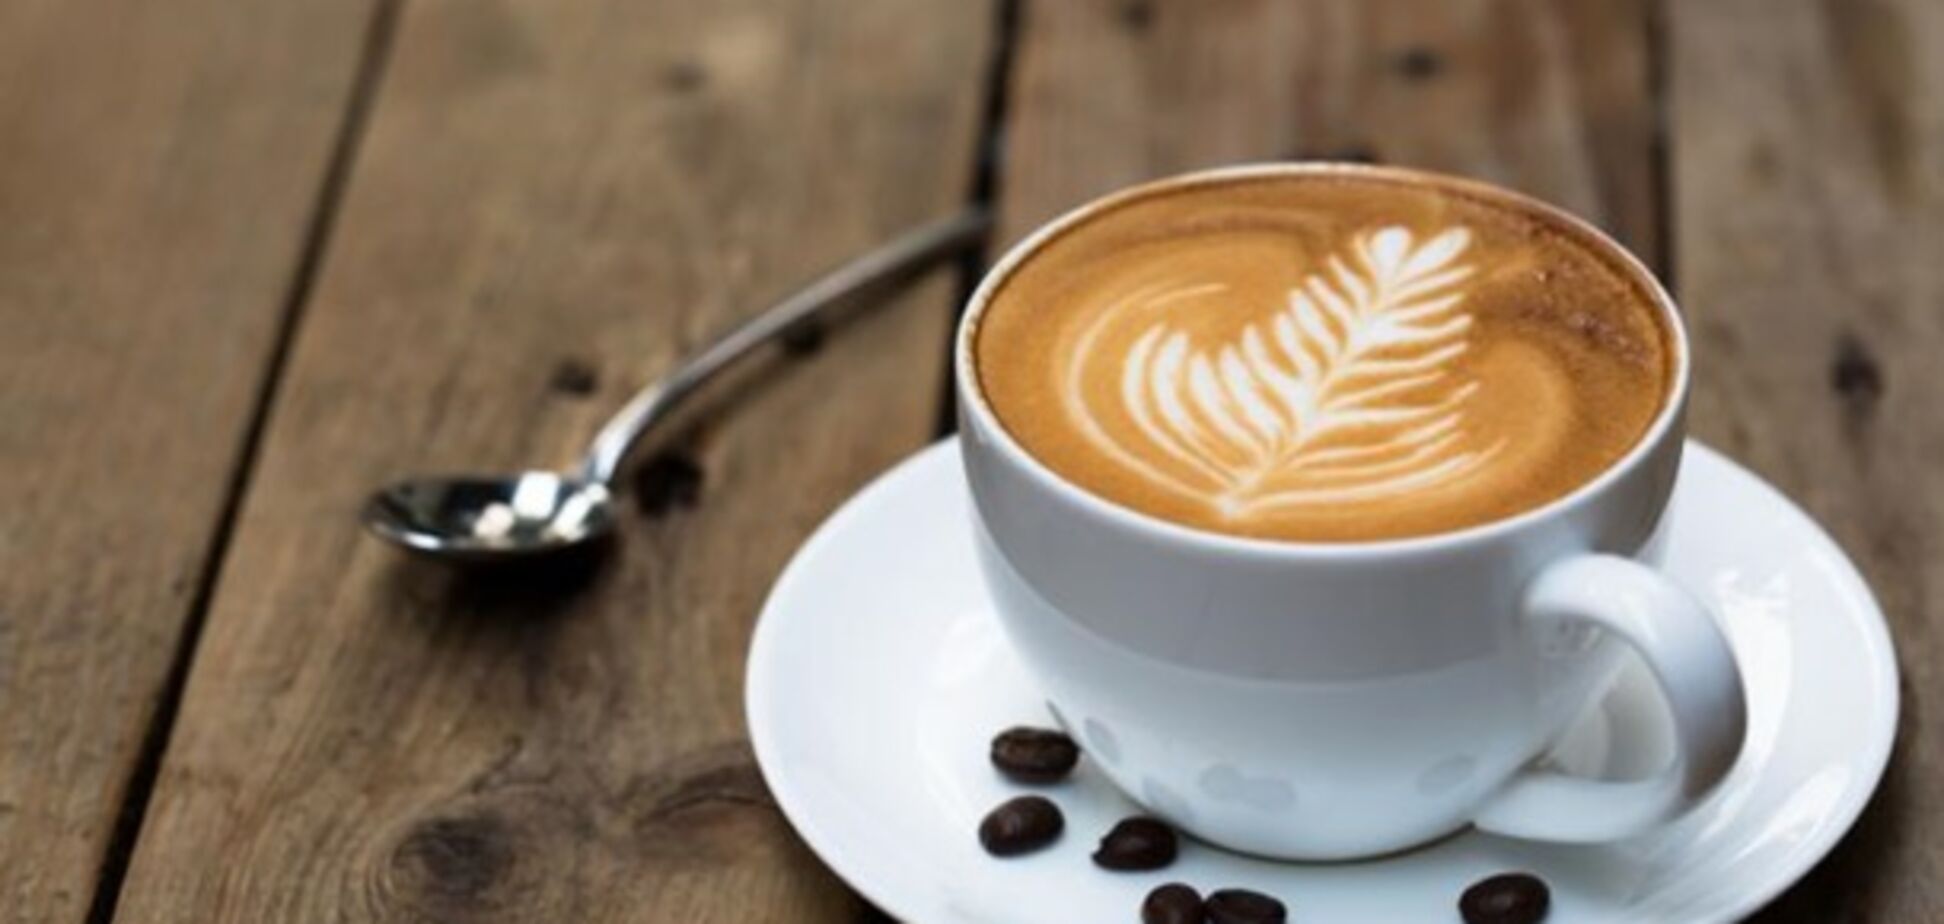 Влияет на сердце: ученые развенчали три мифа о кофеине